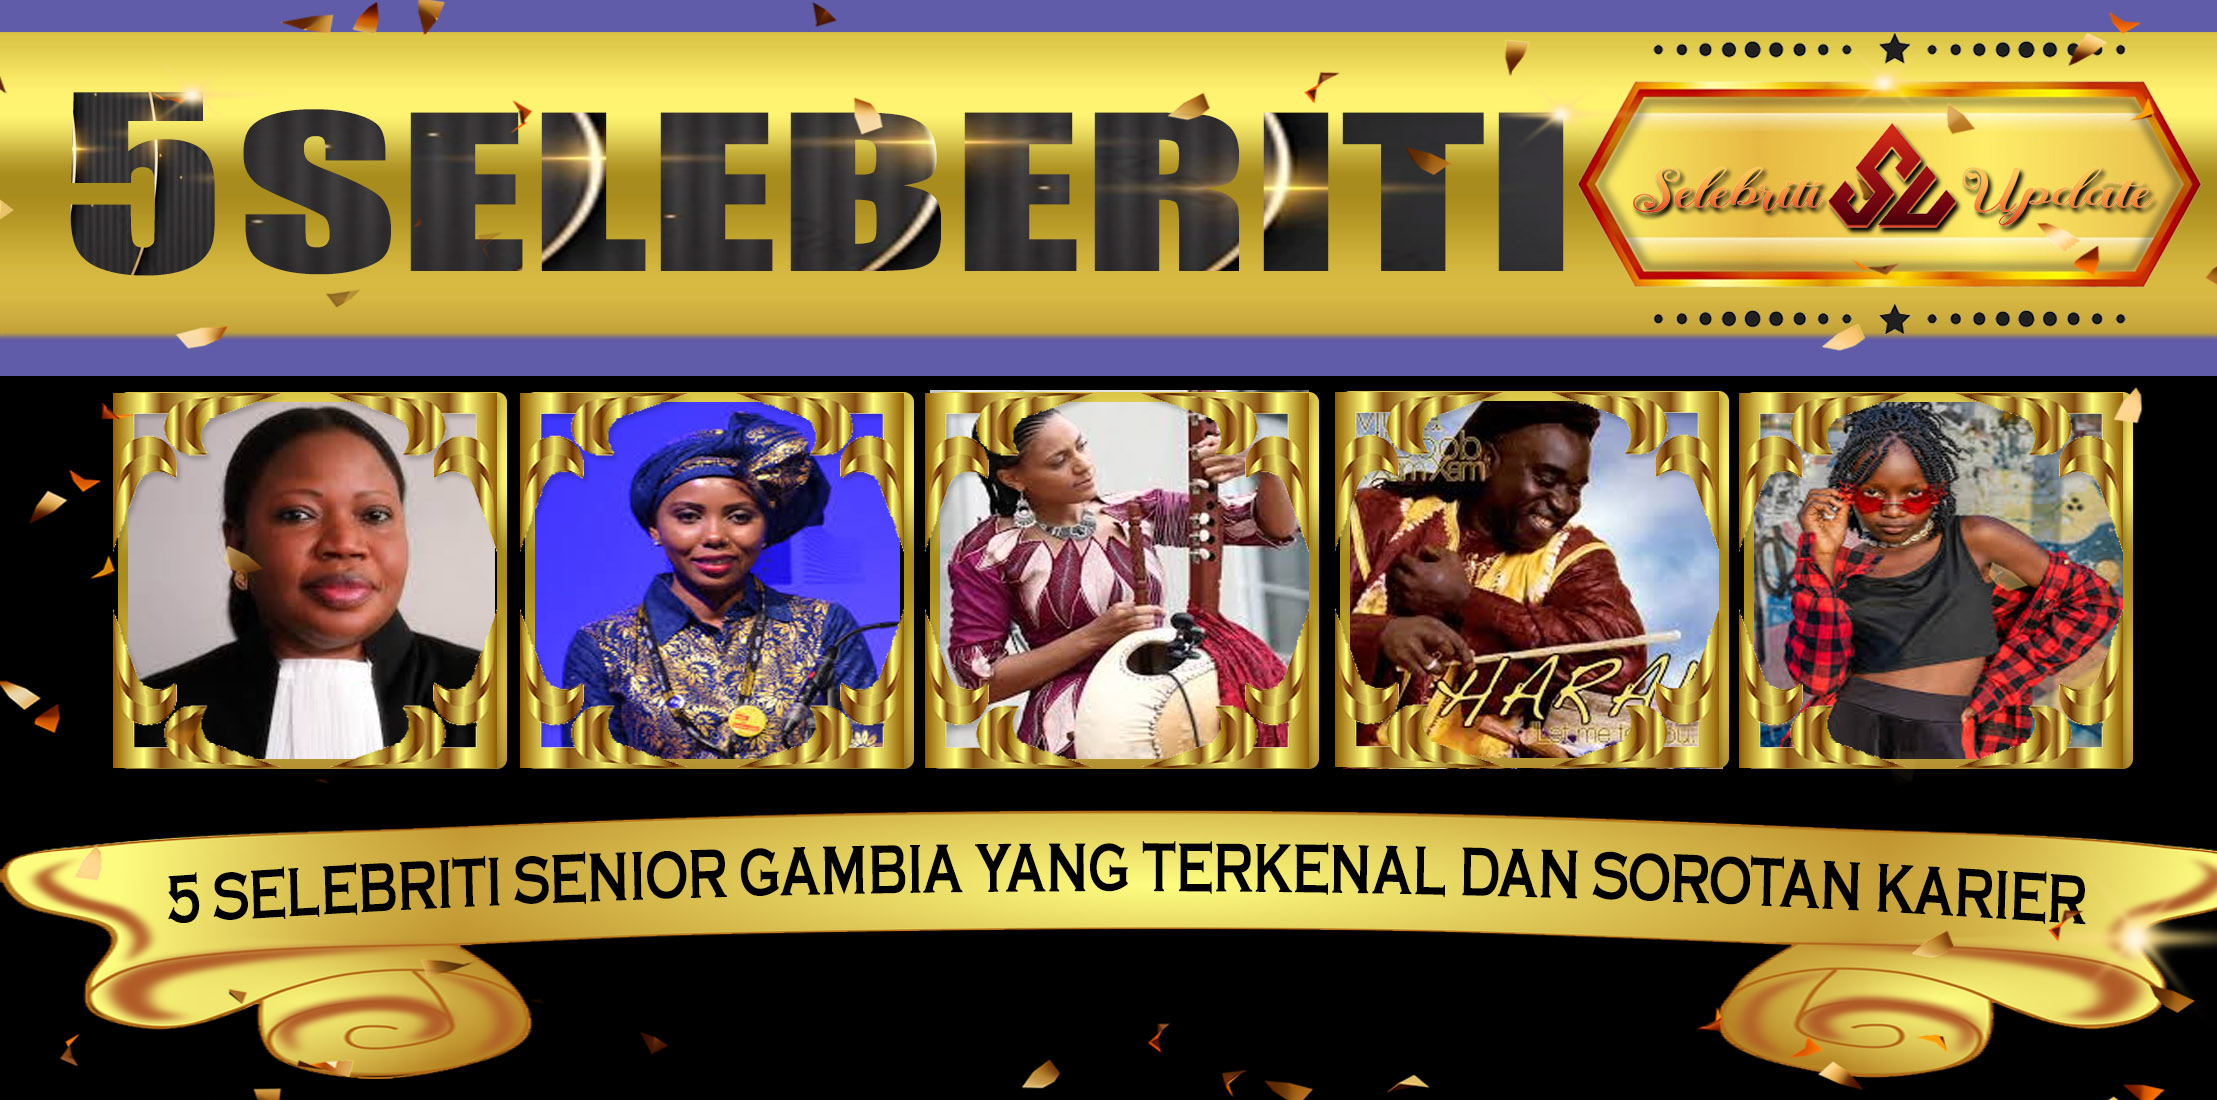 5 Selebriti Senior Gambia